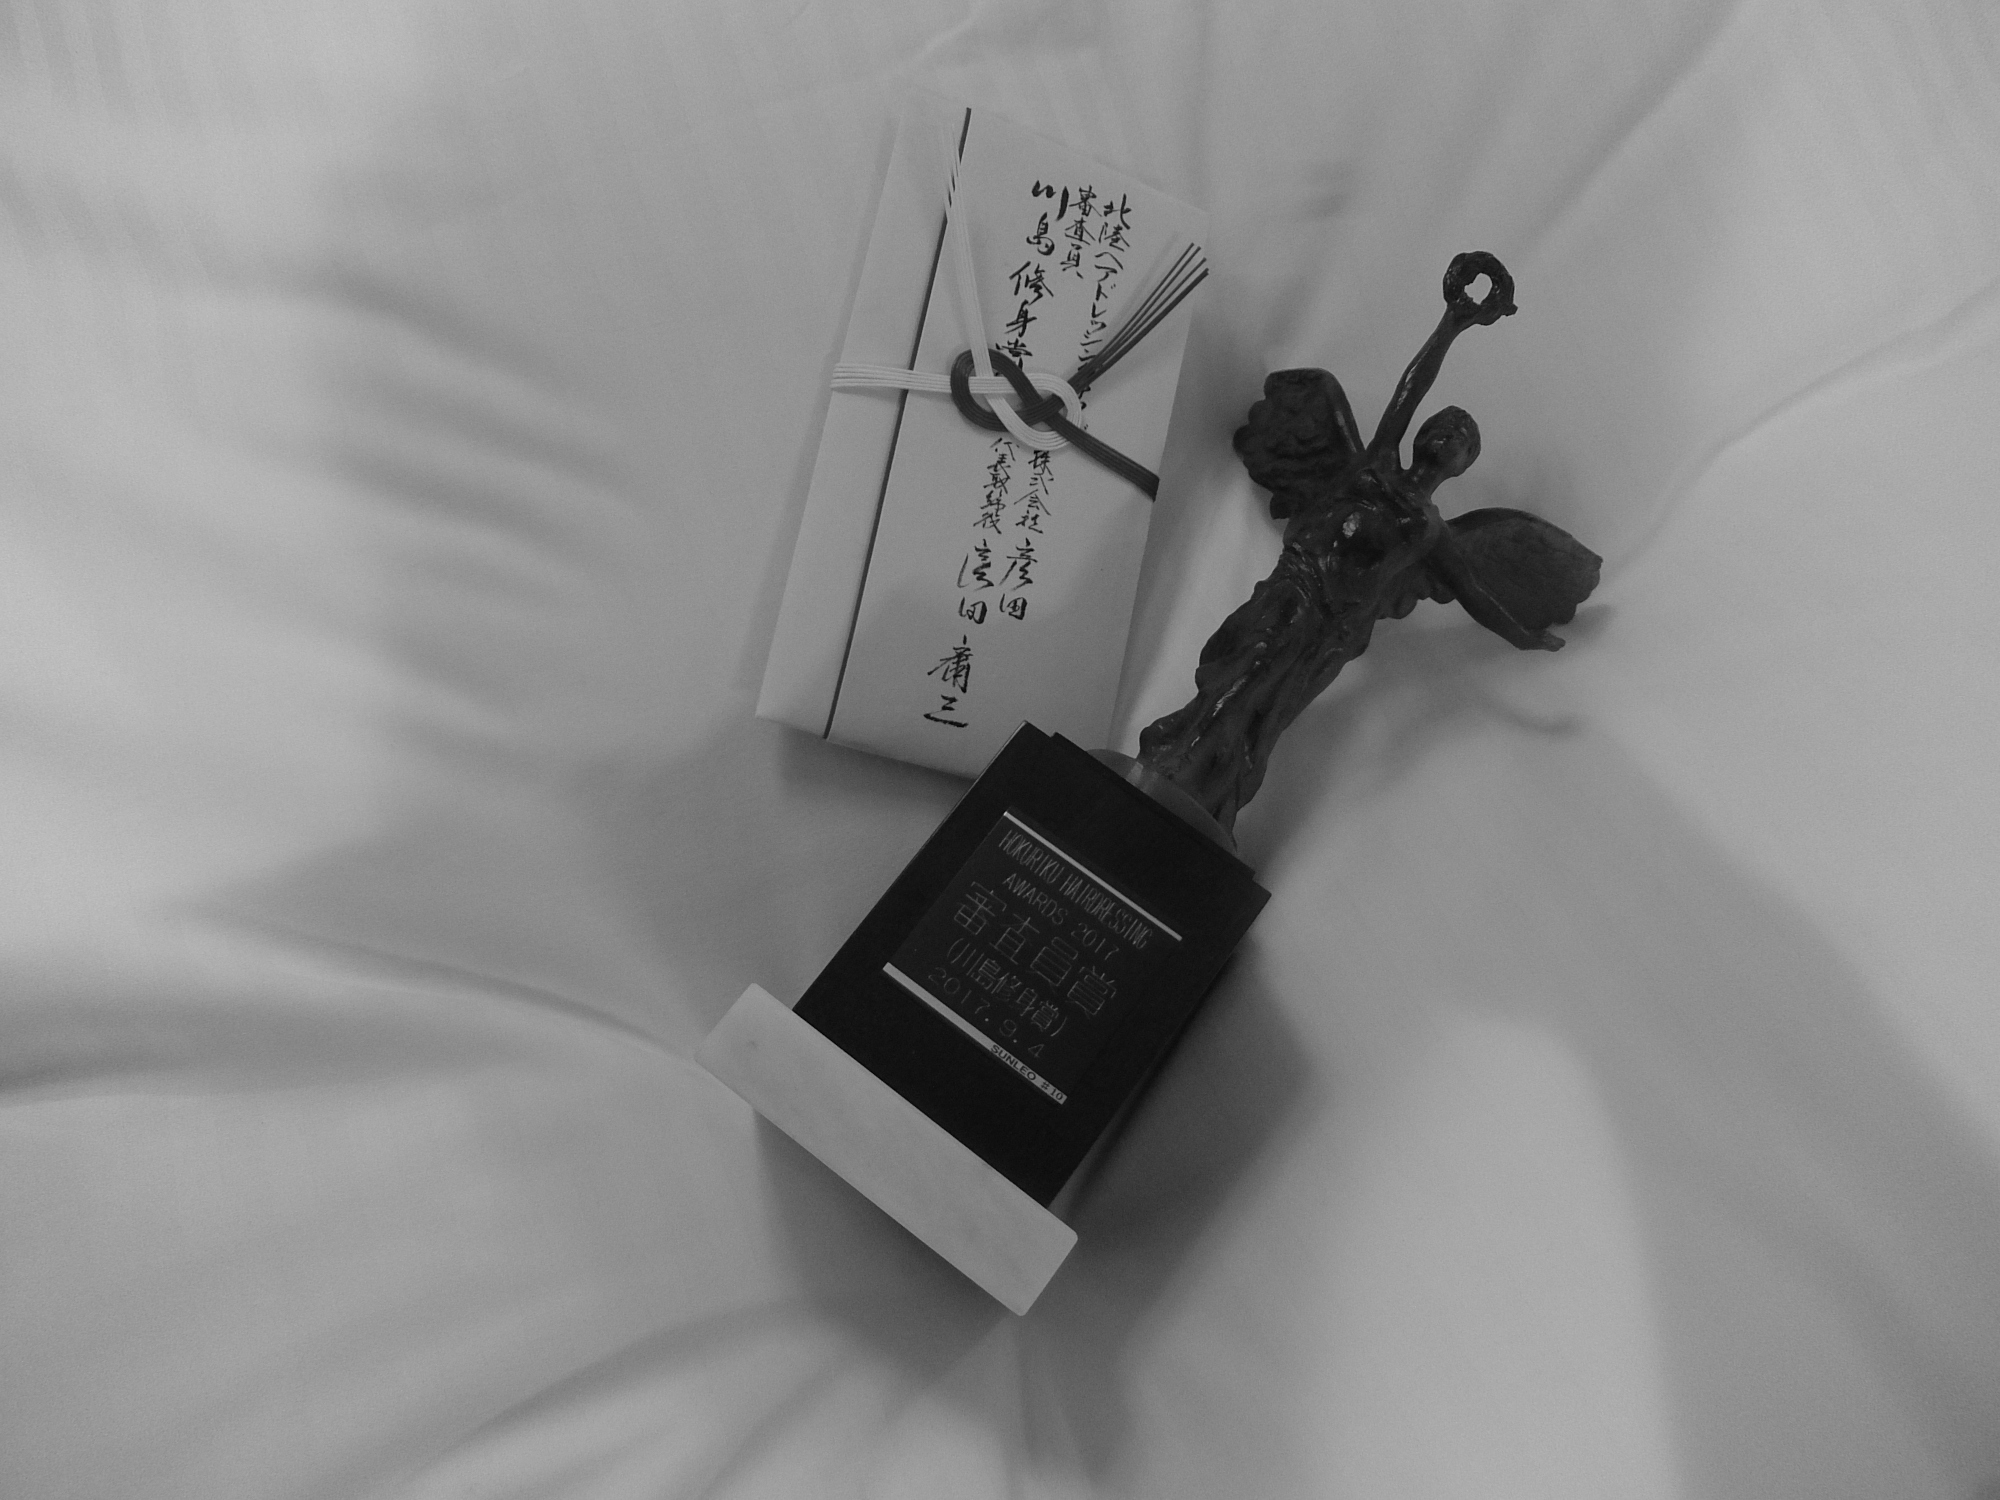 HKHA2017(hokuriku hair doressing award)受賞しました